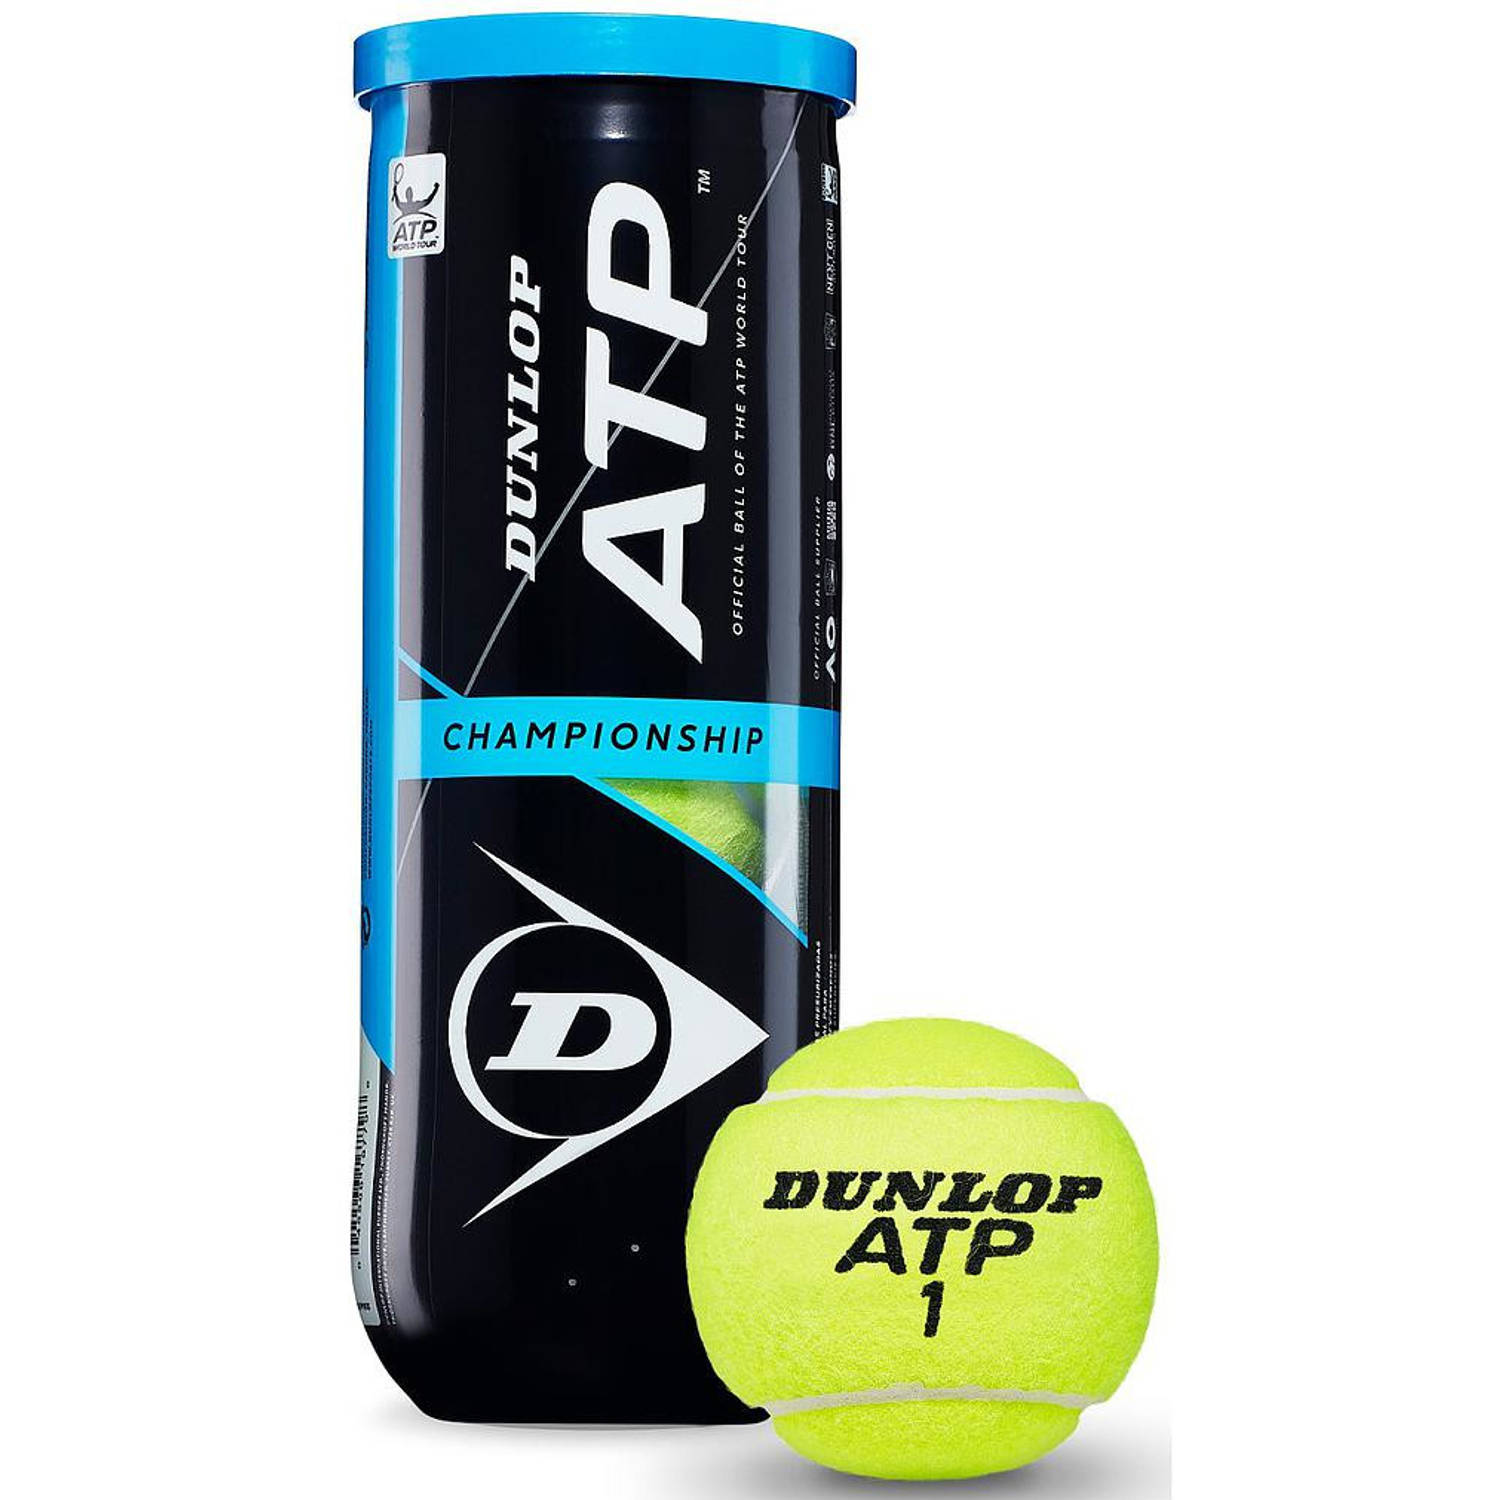 Dunlop Tennisbal Atp Championship Rubber/vilt Geel 3 Stuks online kopen